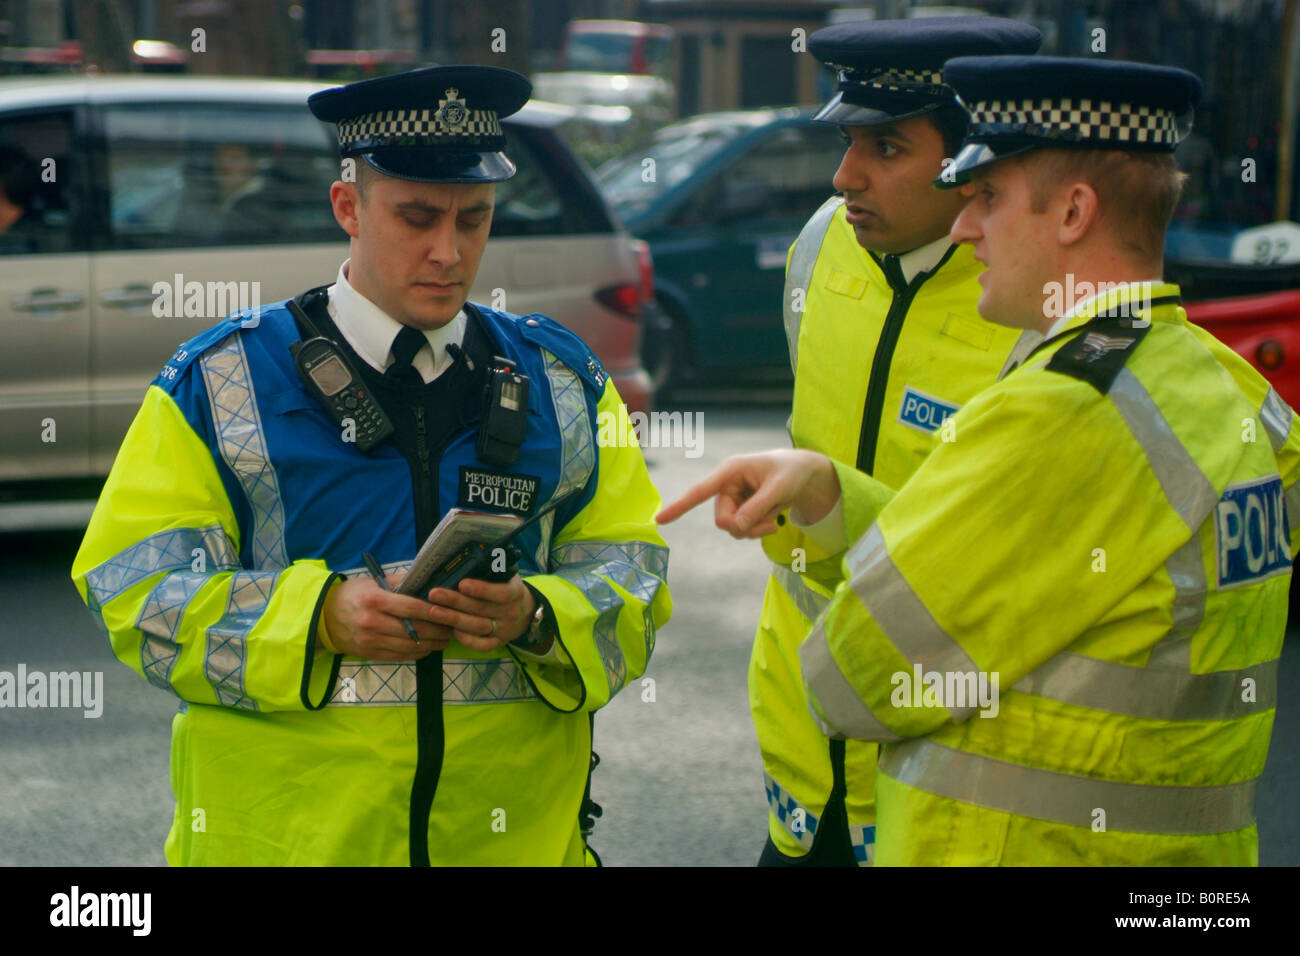 Metropolitan police officers on duty in London. Stock Photo